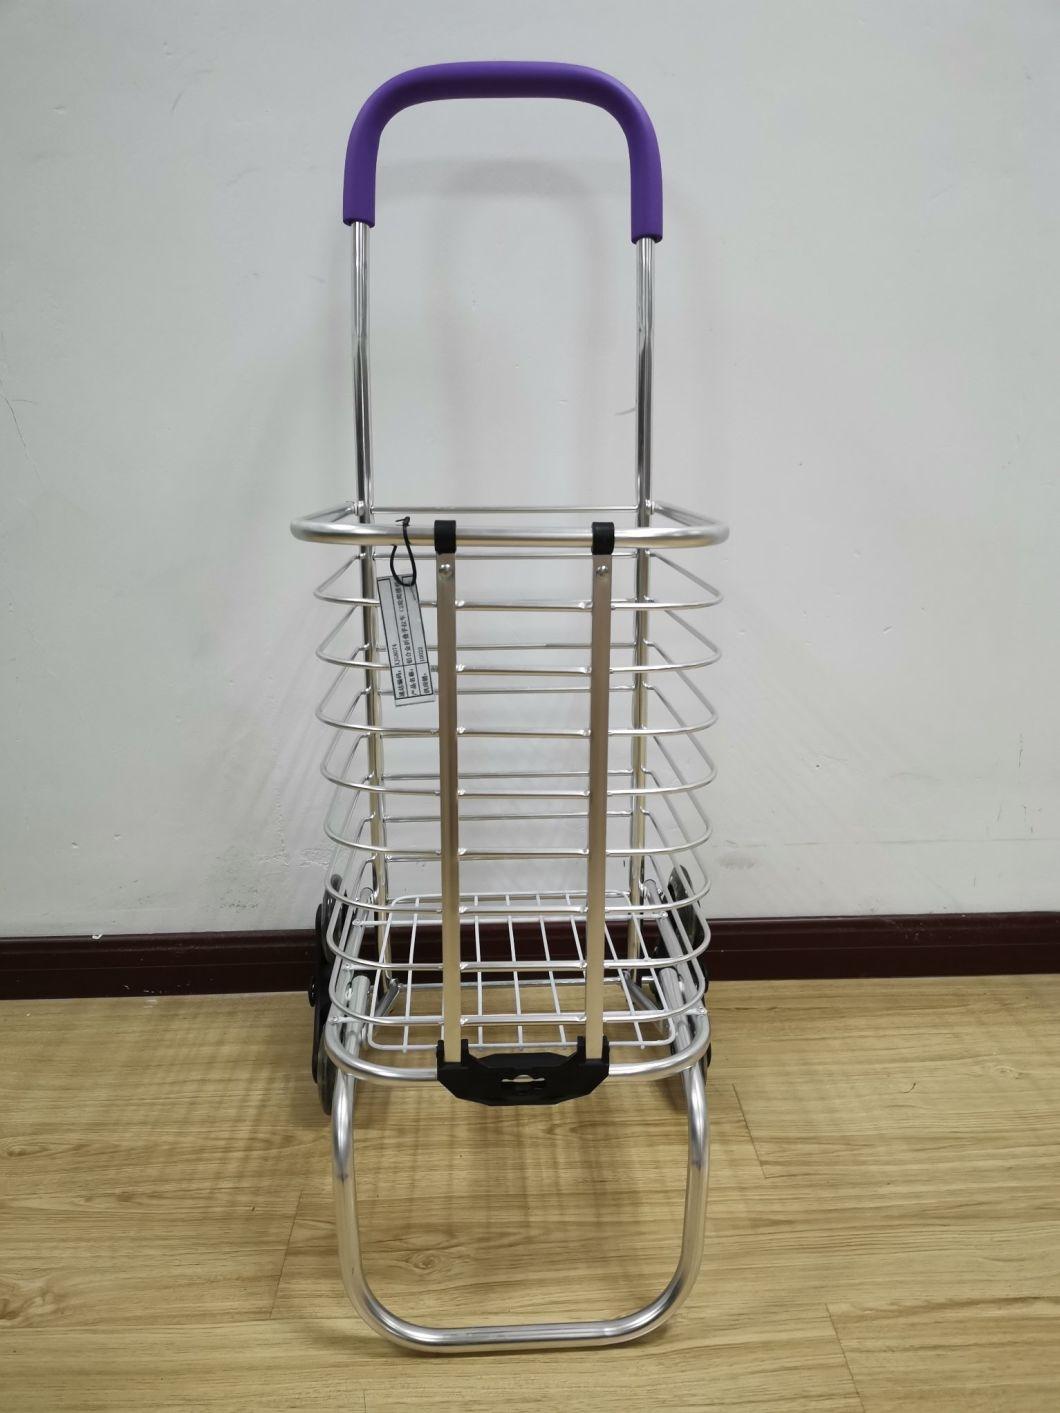 China Supplier 3 Wheel Stair Climbing Folding Cart for Farmers Market Shopping